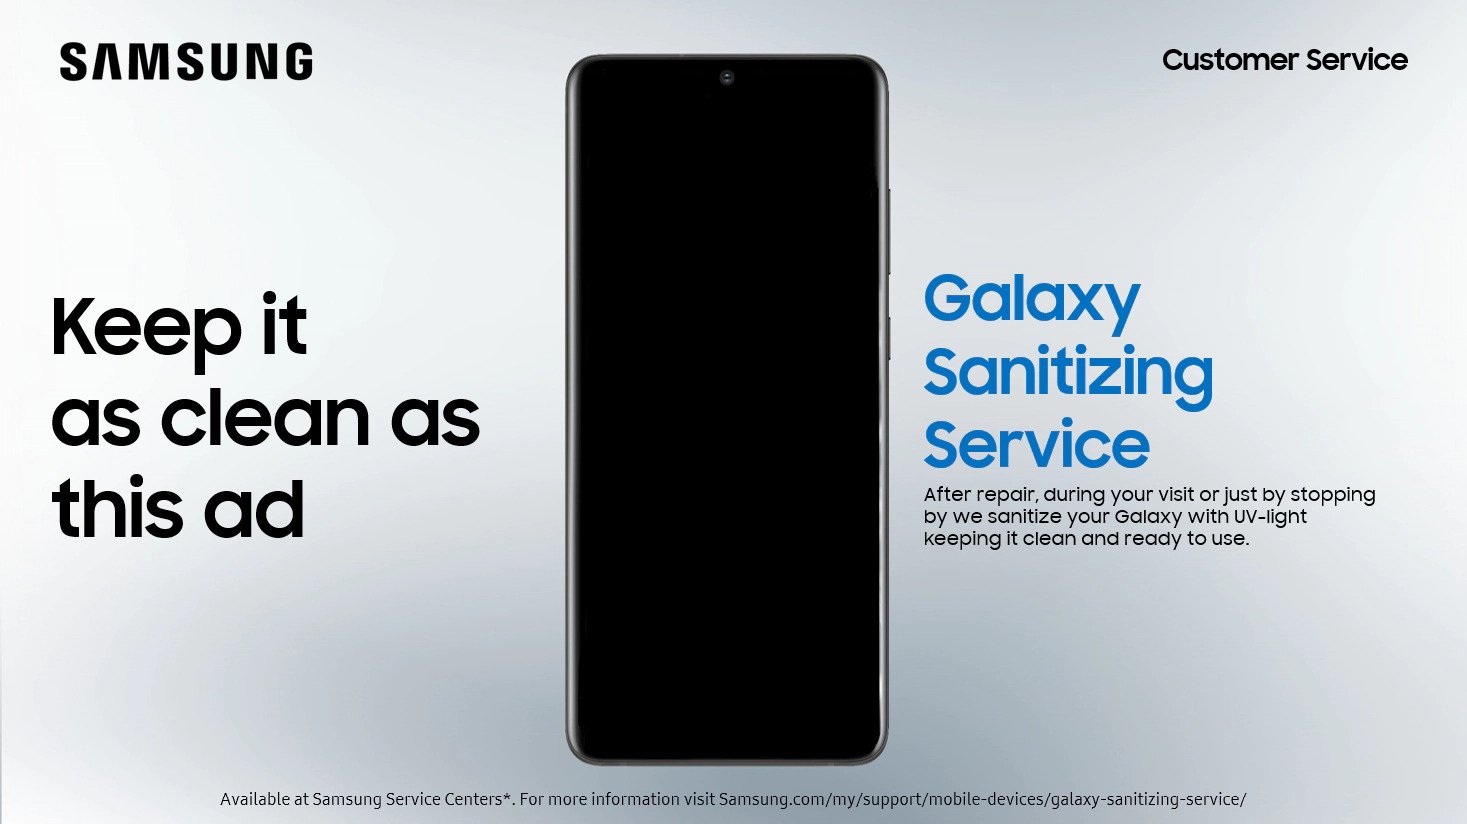 Samsung Galaxy Sanitizing Service